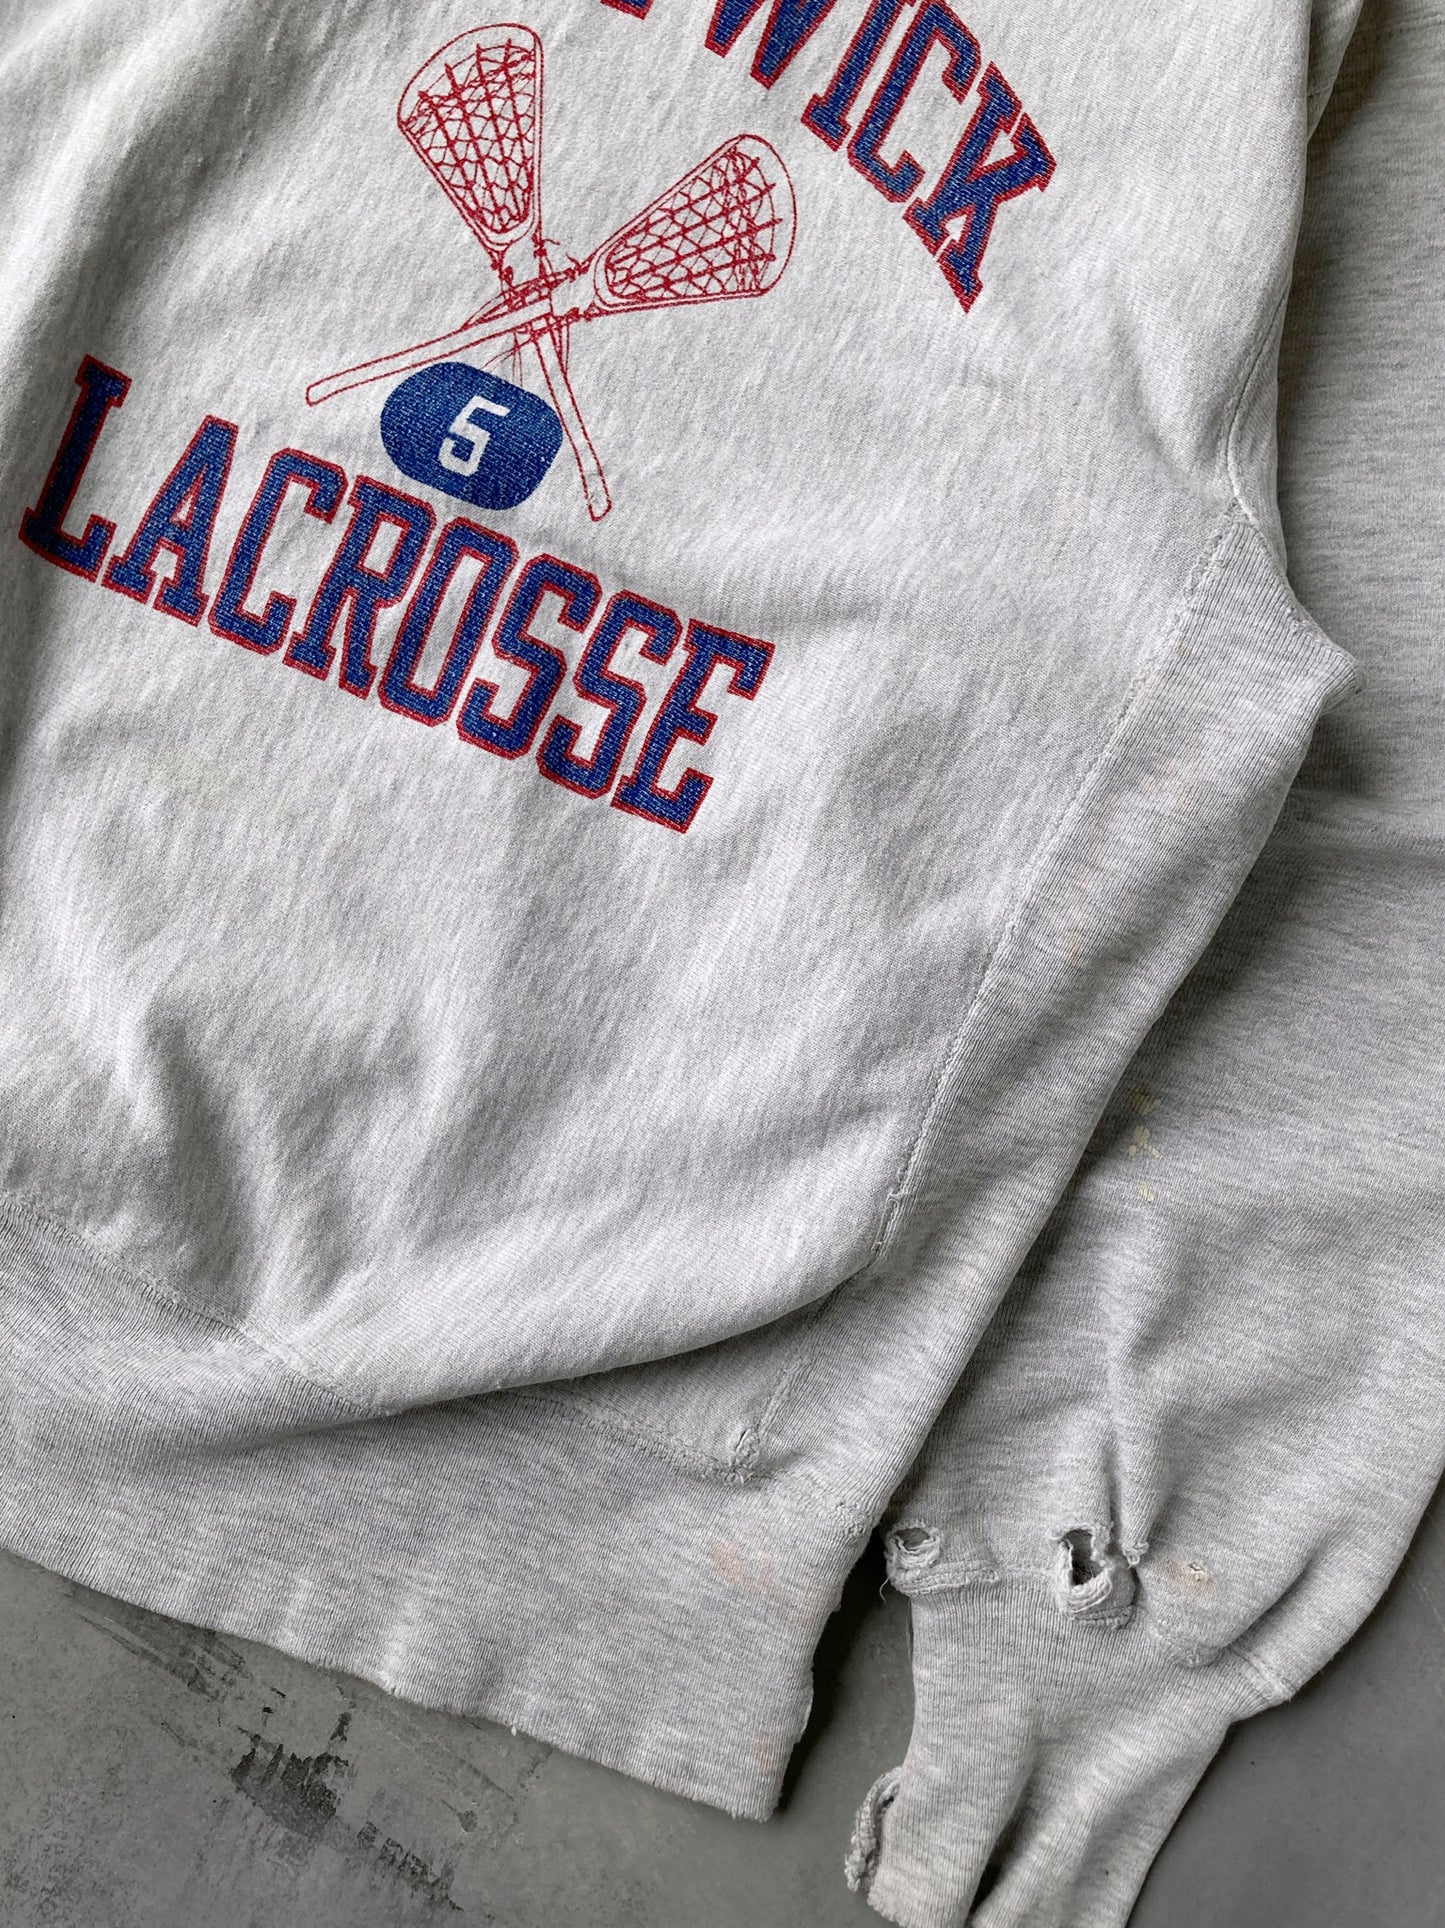 Hartwick College Lacrosse Reverse Weave 90's - Large